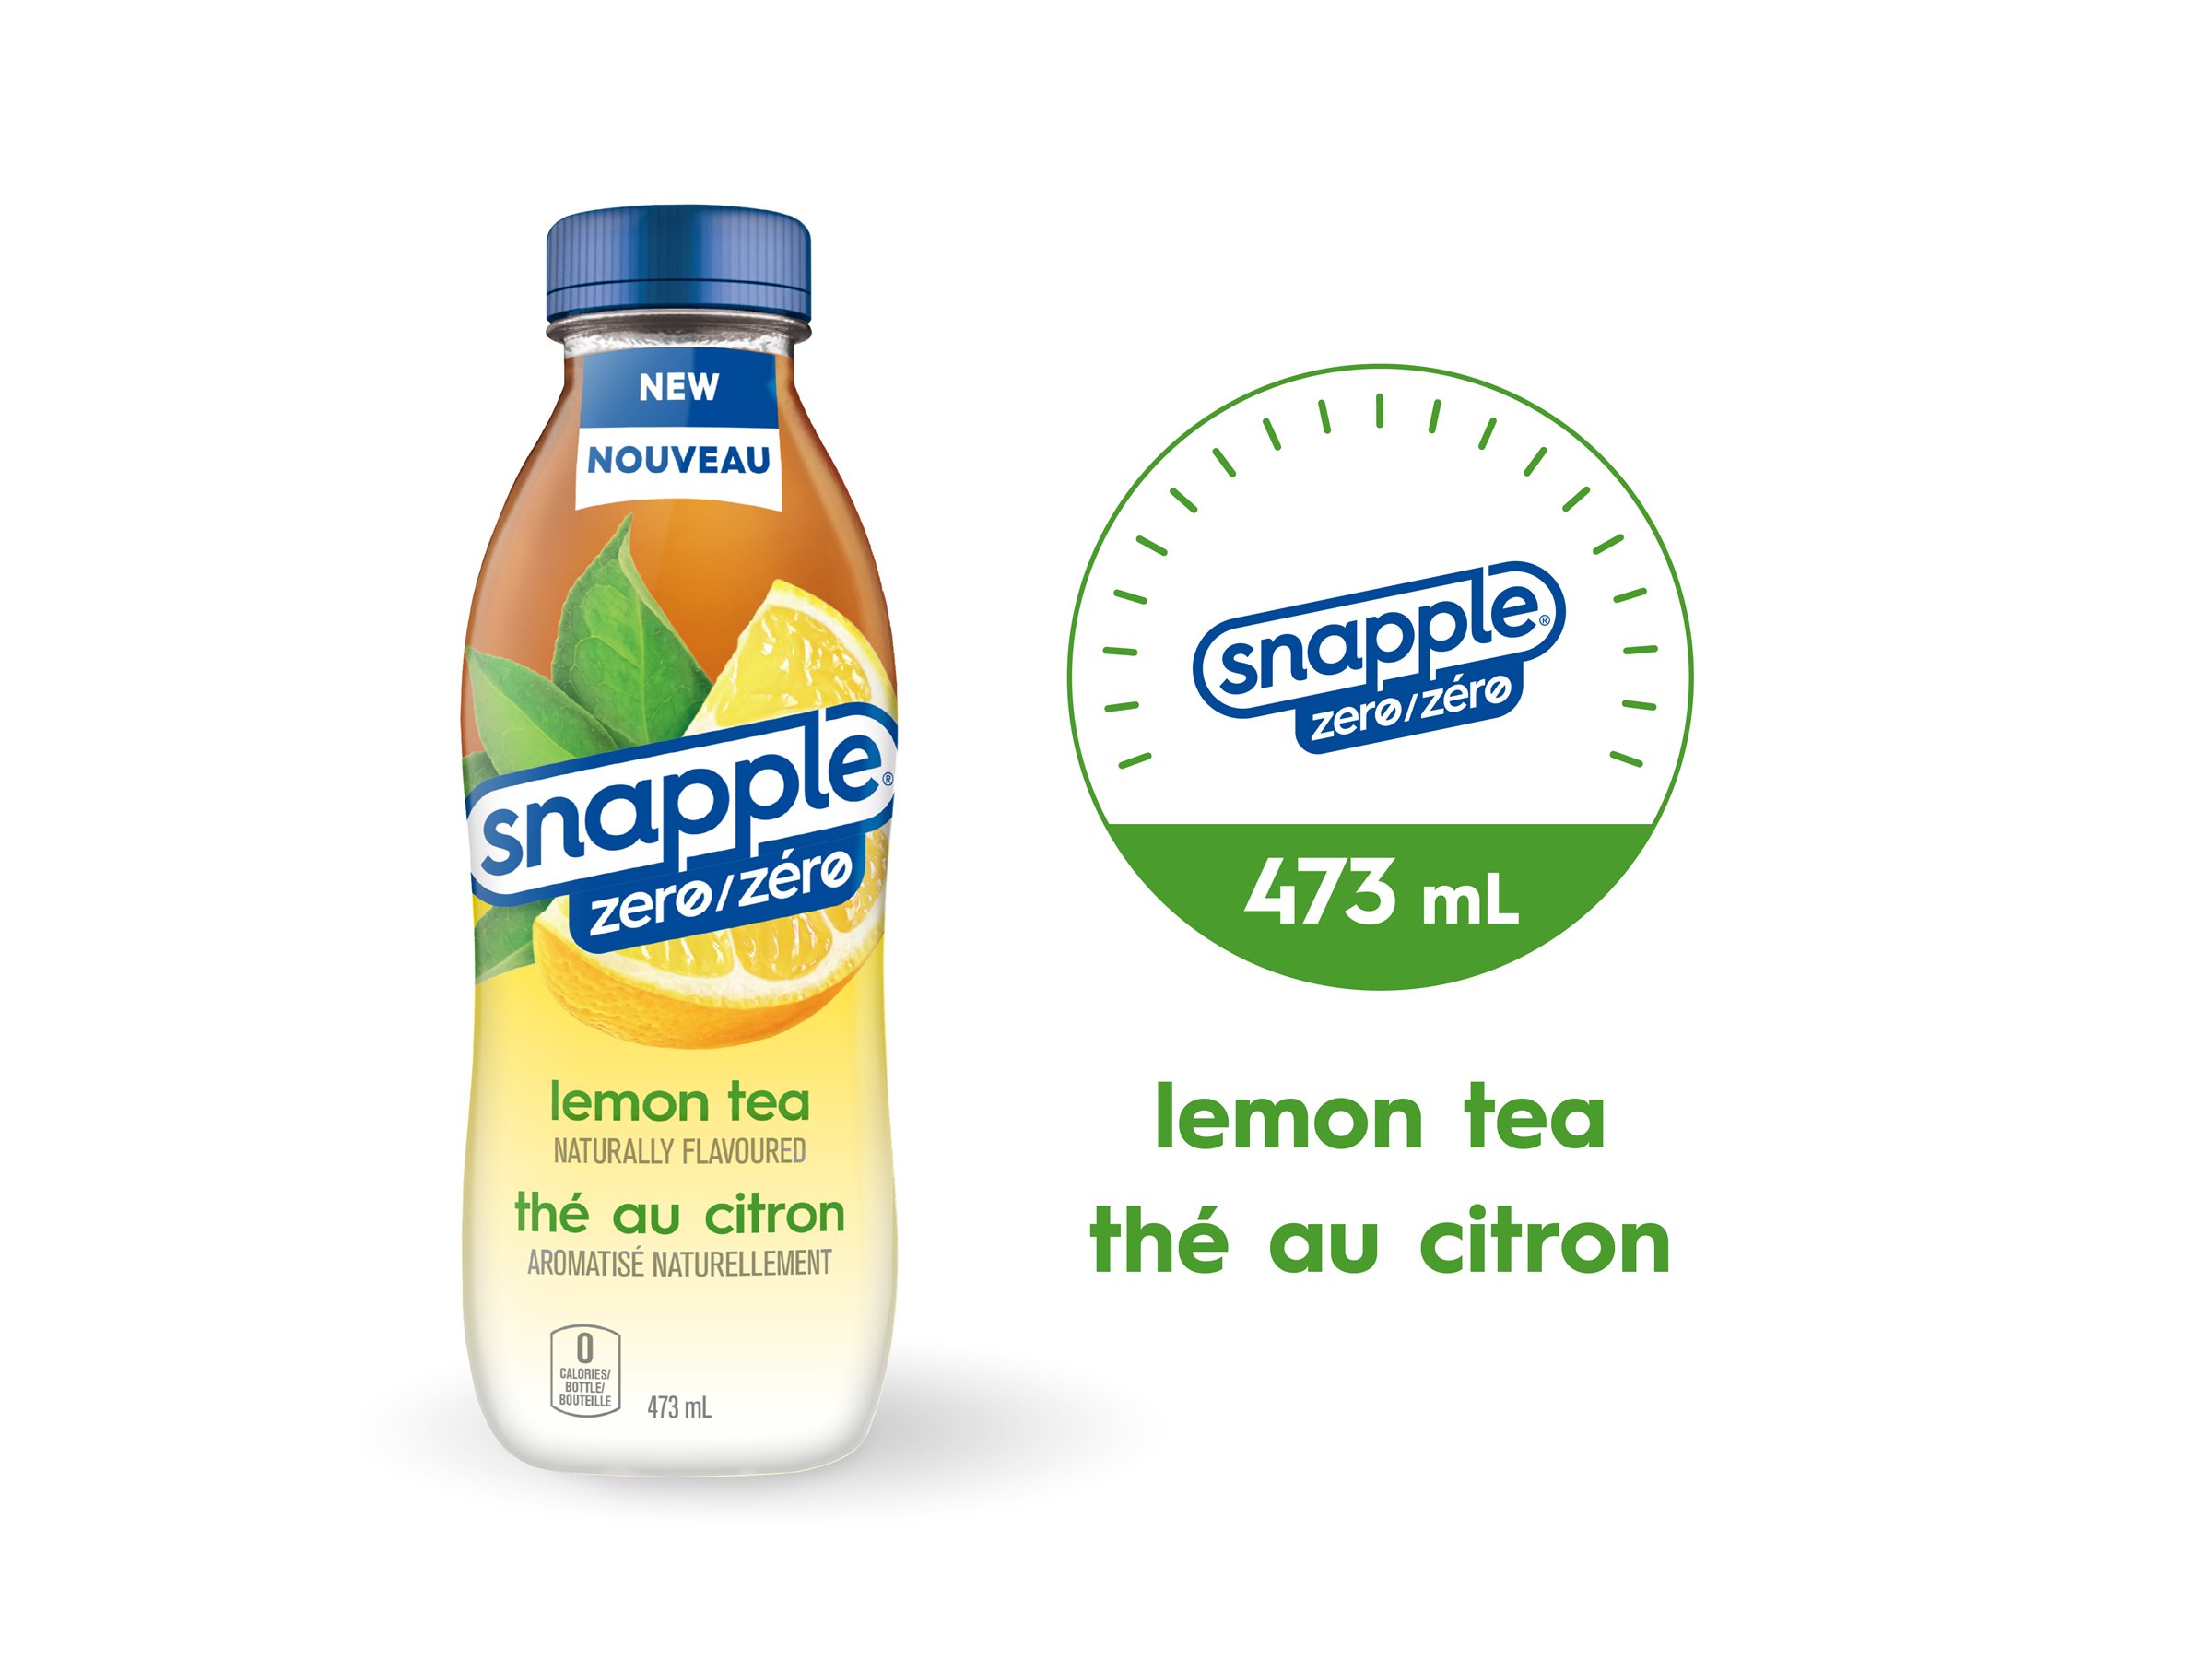 SNAPPLE Zero Sugar Iced Tea - Lemon - 473ml